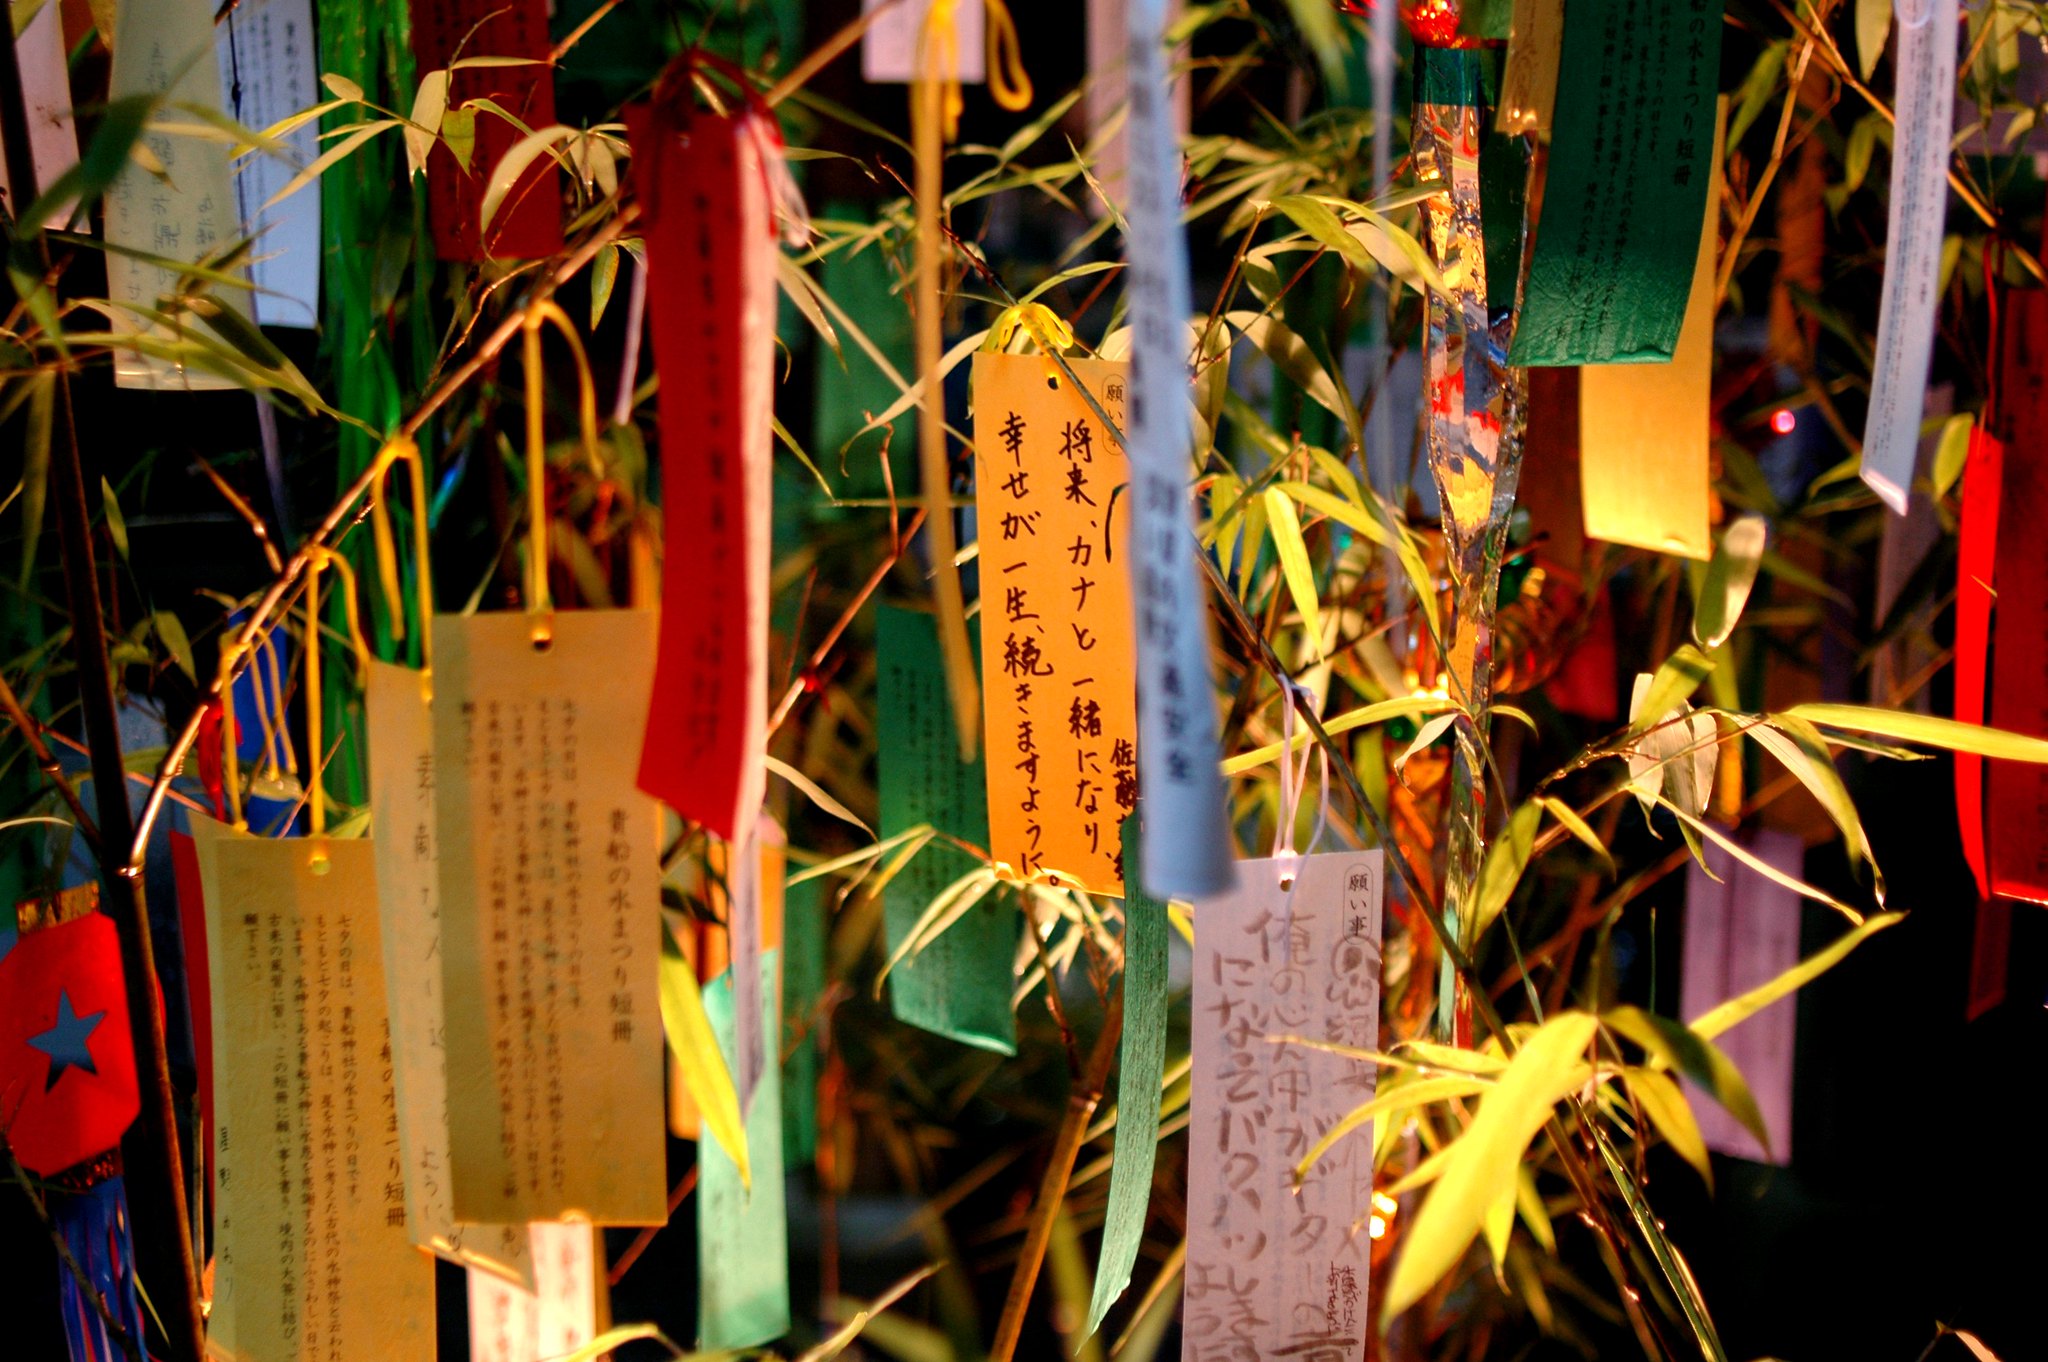 Bambus mit "Tanzaku" Wunschzettel (Foto Yuki Yaginuma, Flickr)